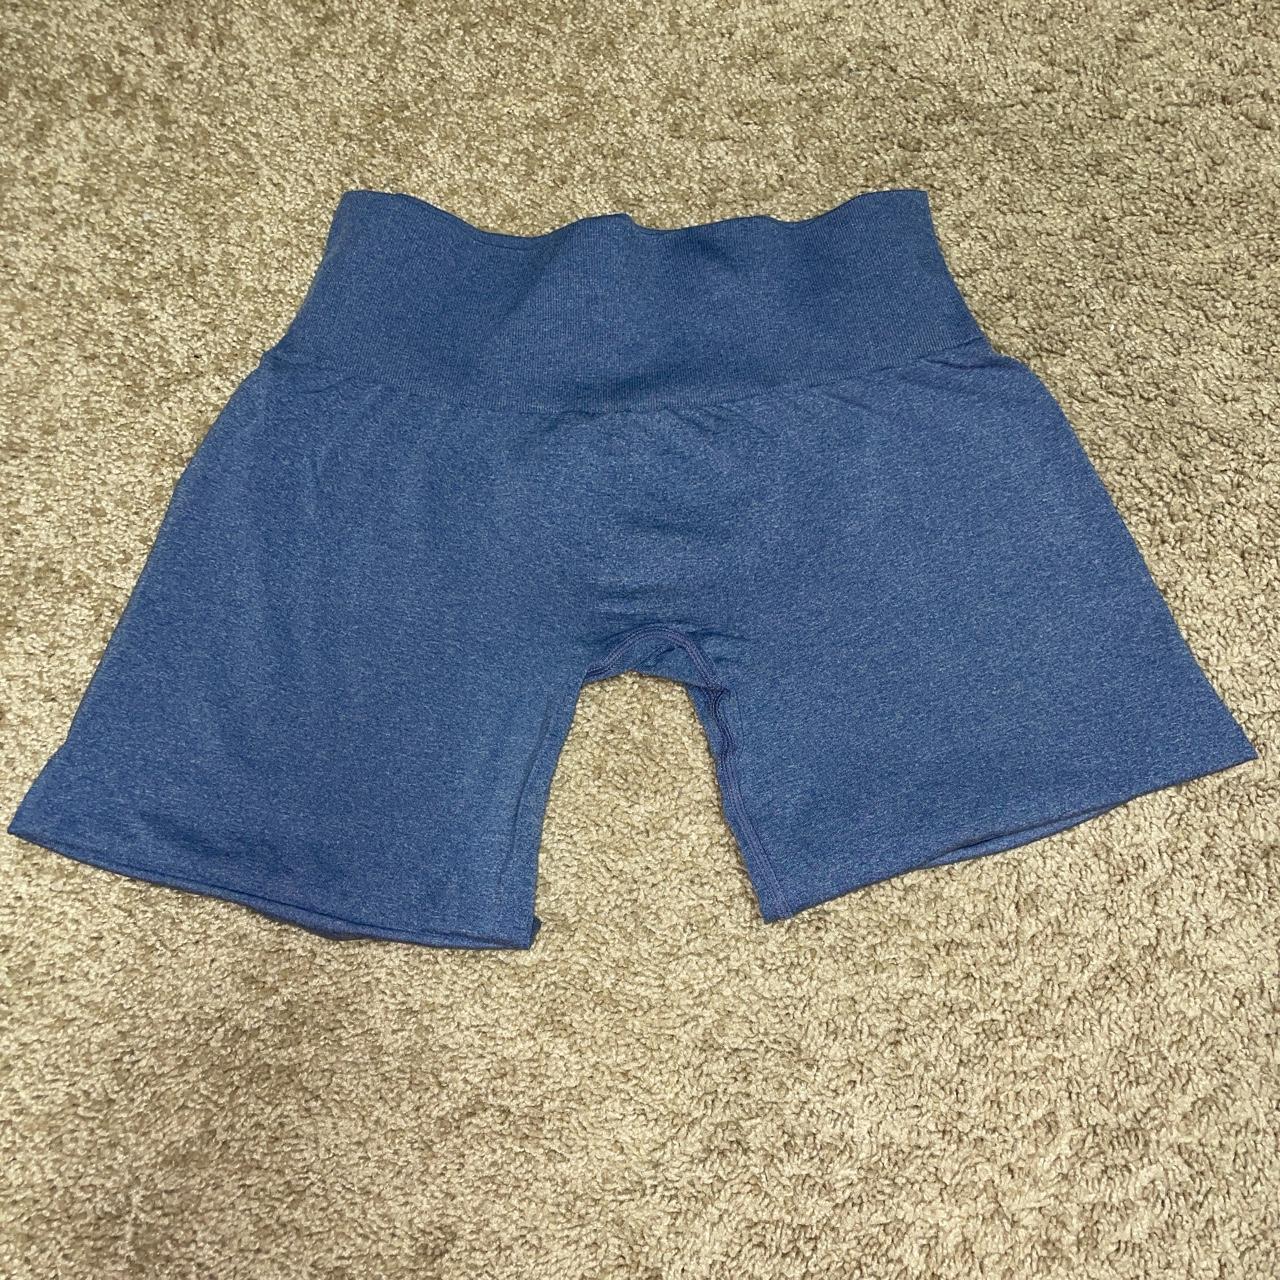 Blue NVGTN athletic shorts Size M, these shorts... - Depop